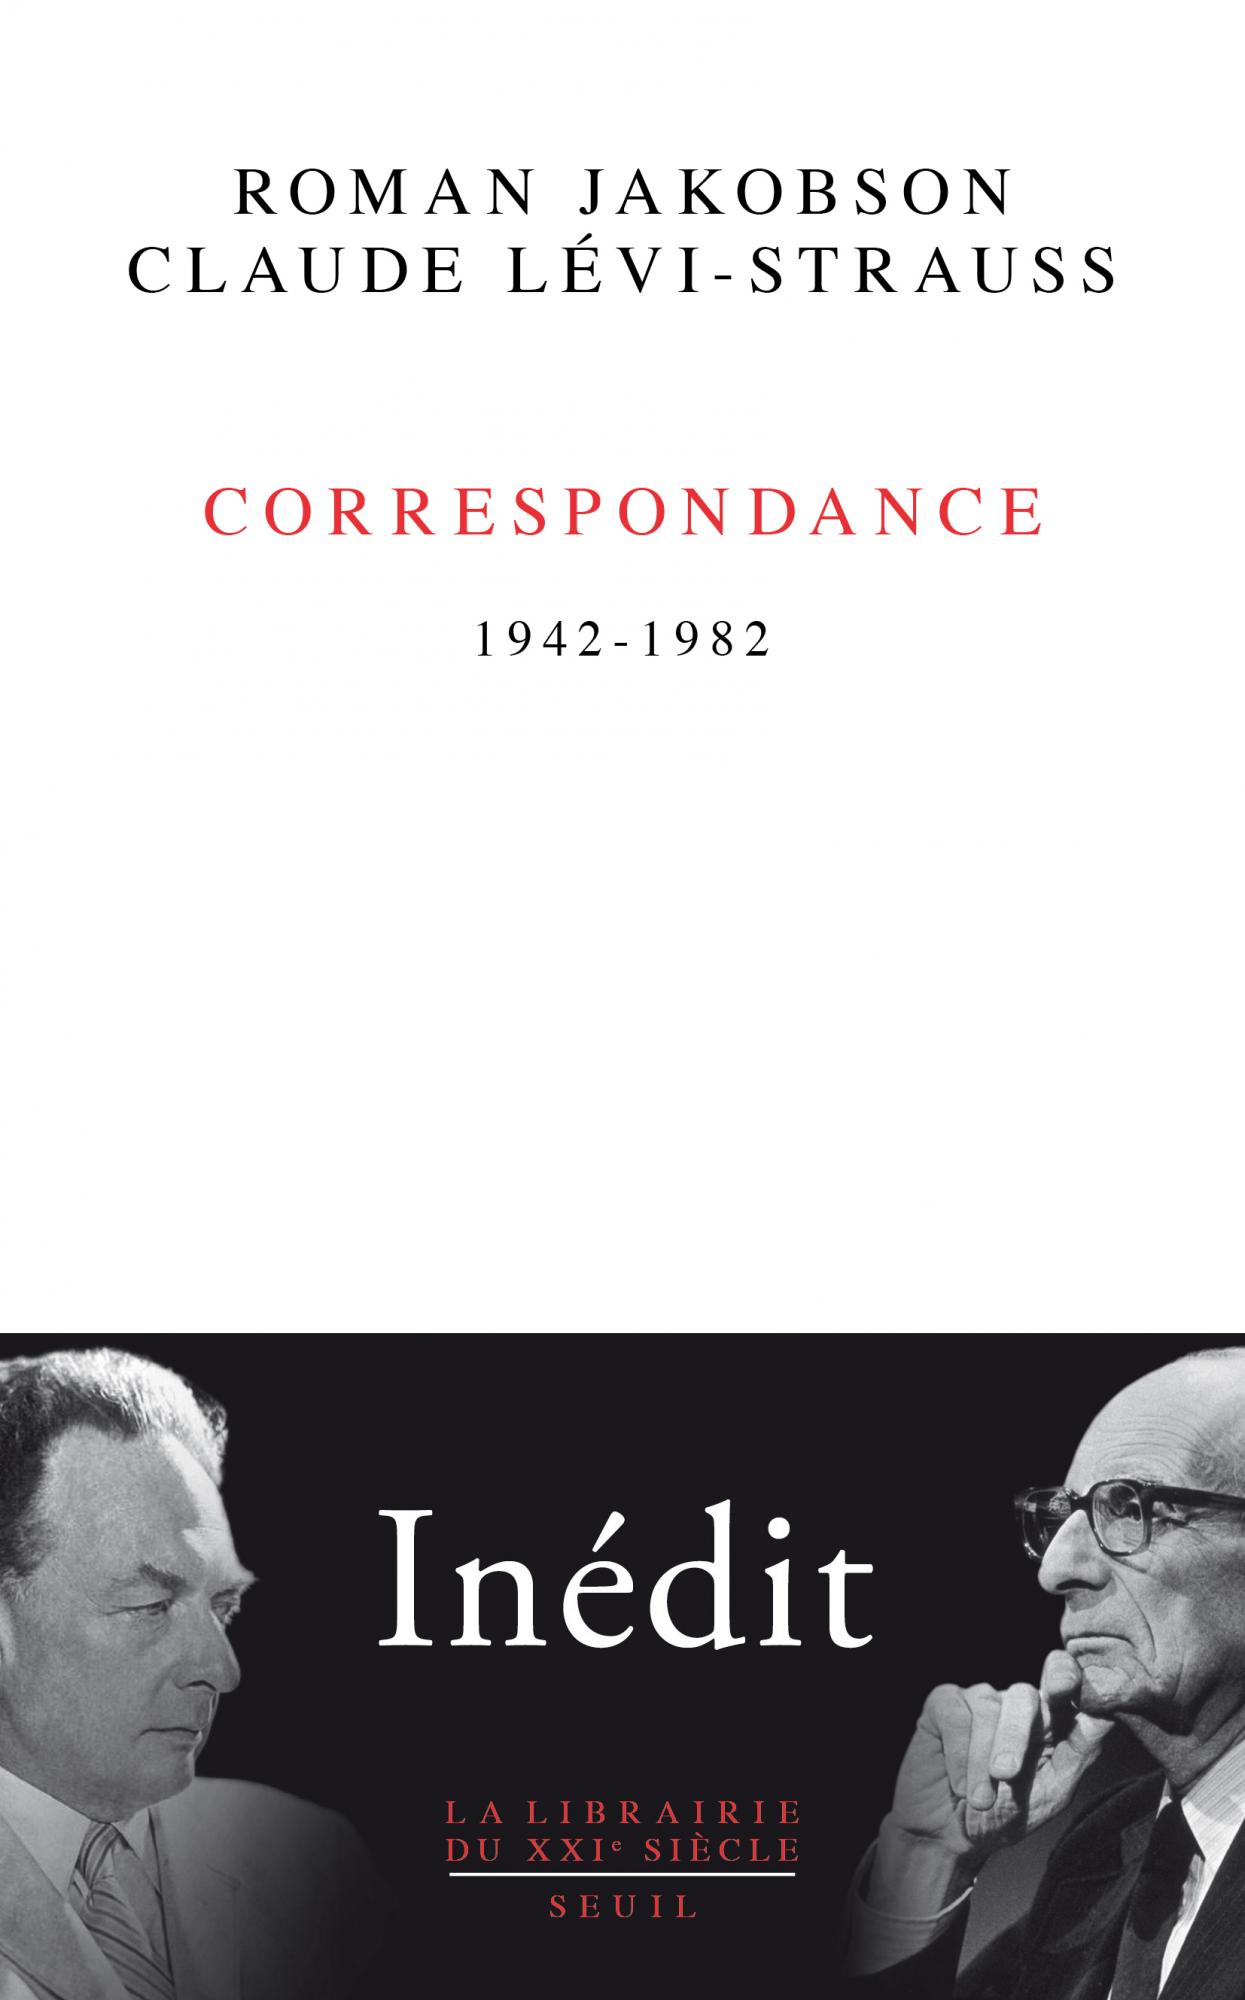 R. Jakobson, C. Levi-Strauss, Correspondance 1942-1982 (inédit)